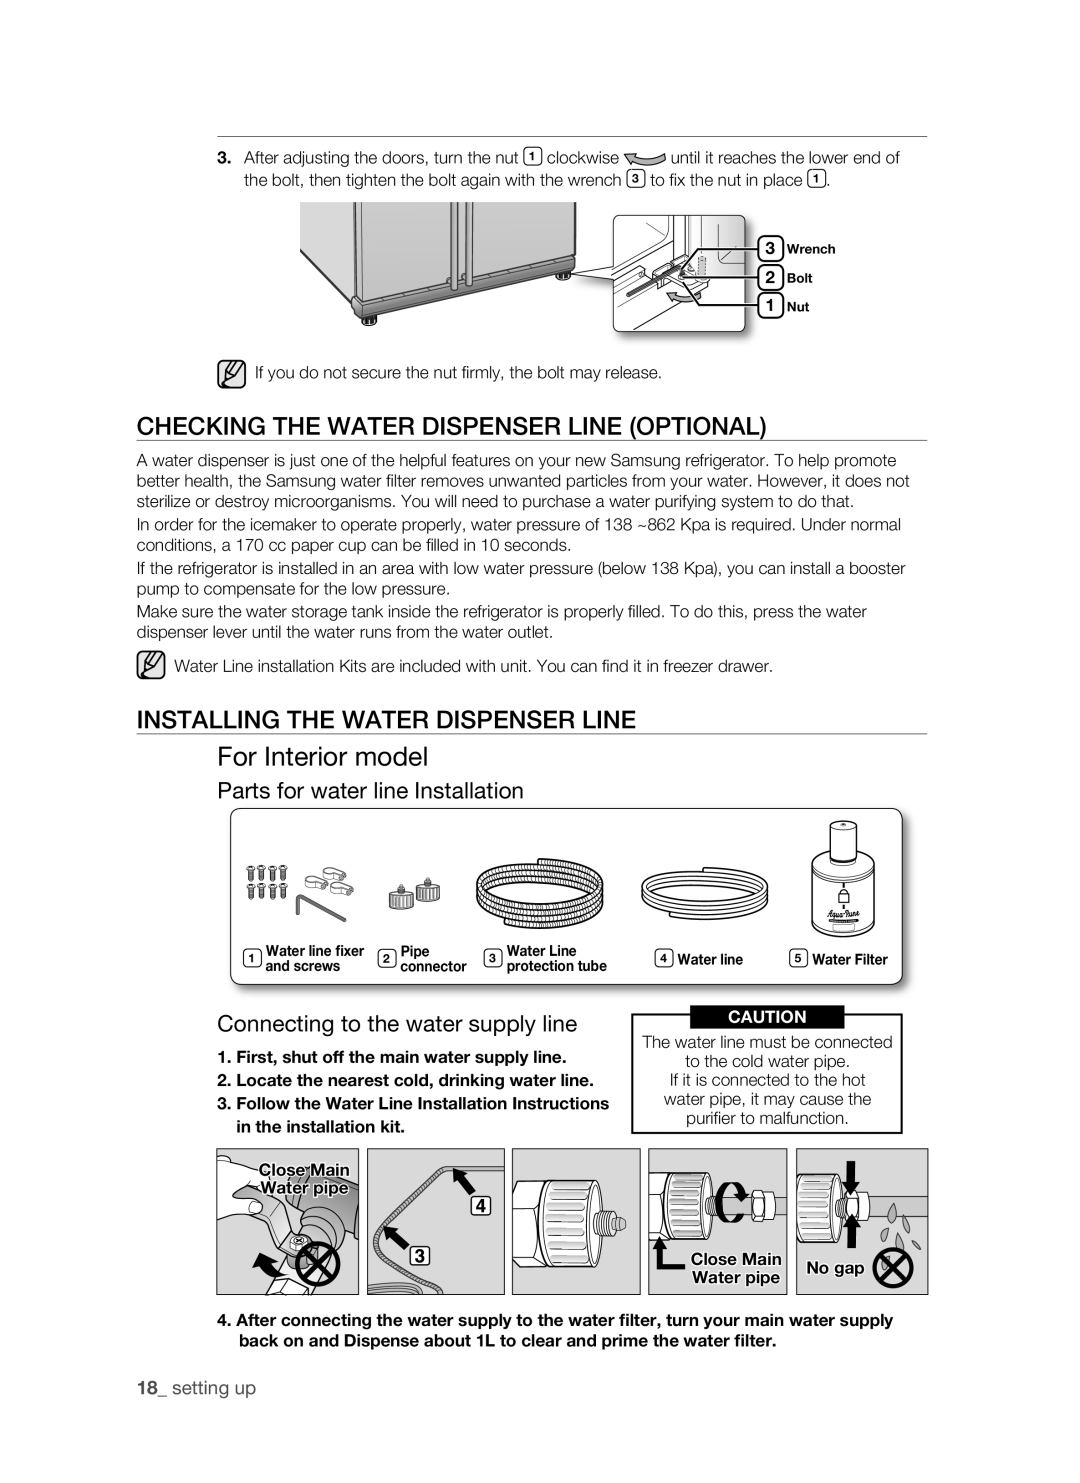 Samsung RSH1B For Interior model, CHECKING THE WATER DISPENSER LINE optional, Installing the water dispenser line, No gap 